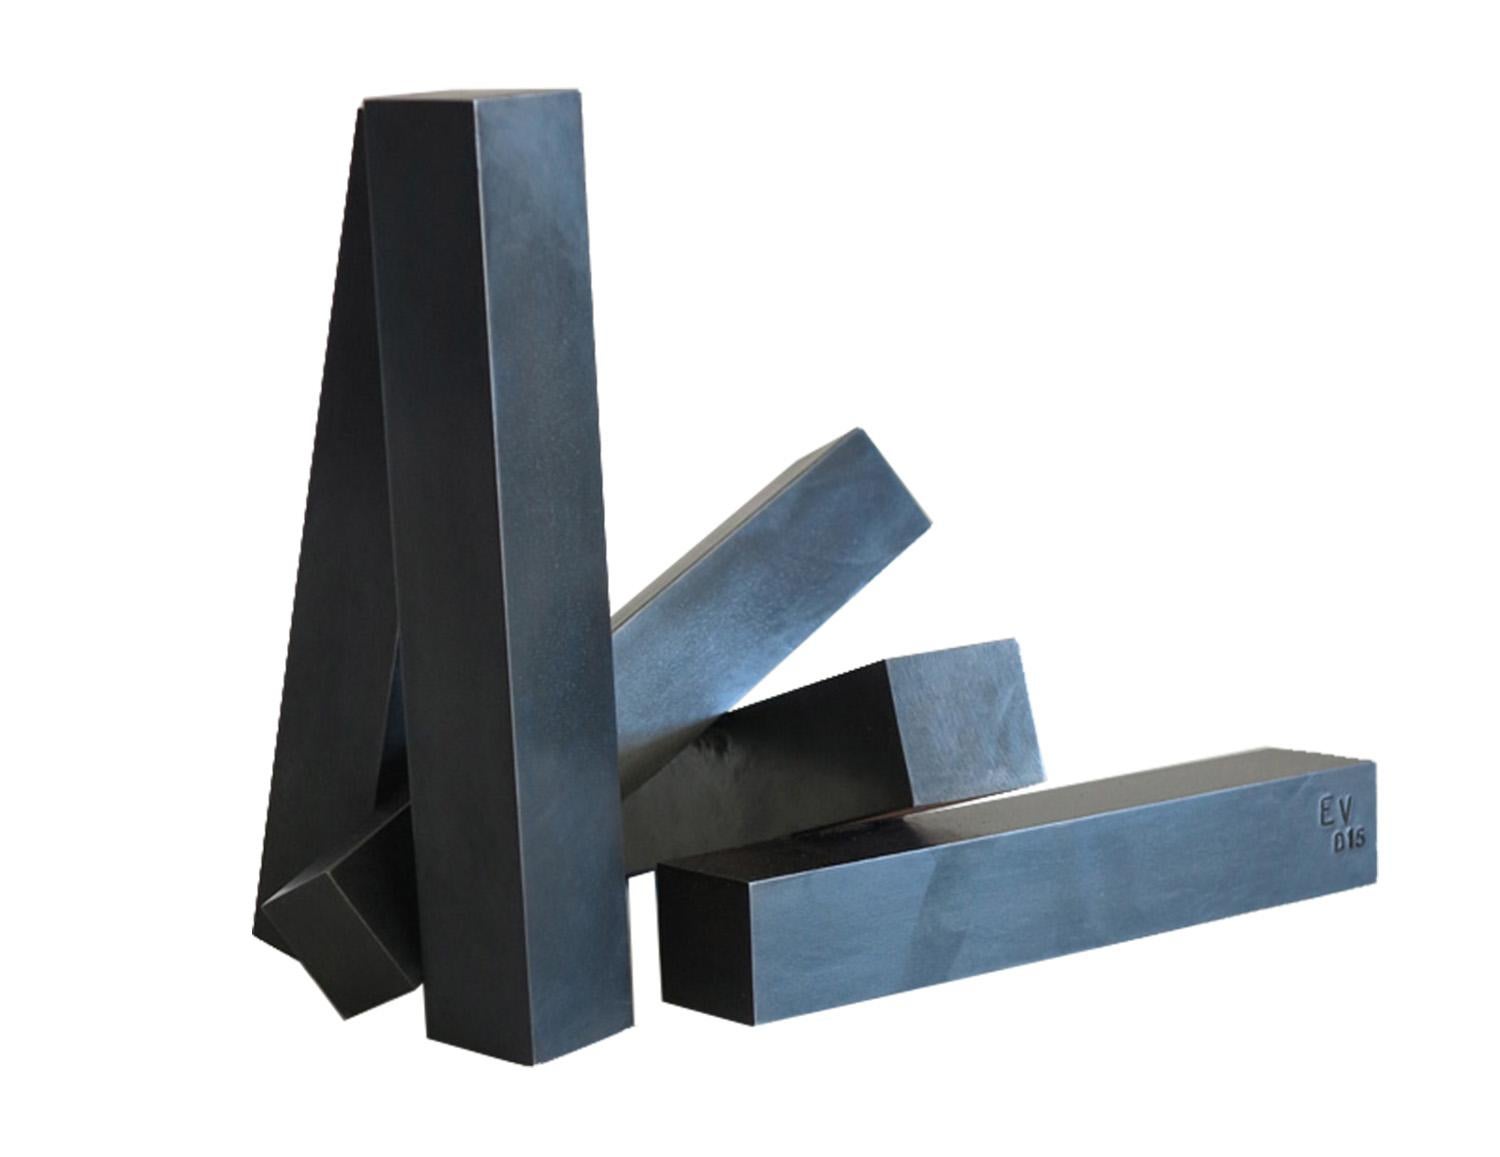 Abstract Sculpture Etienne Viard - 5 Barres